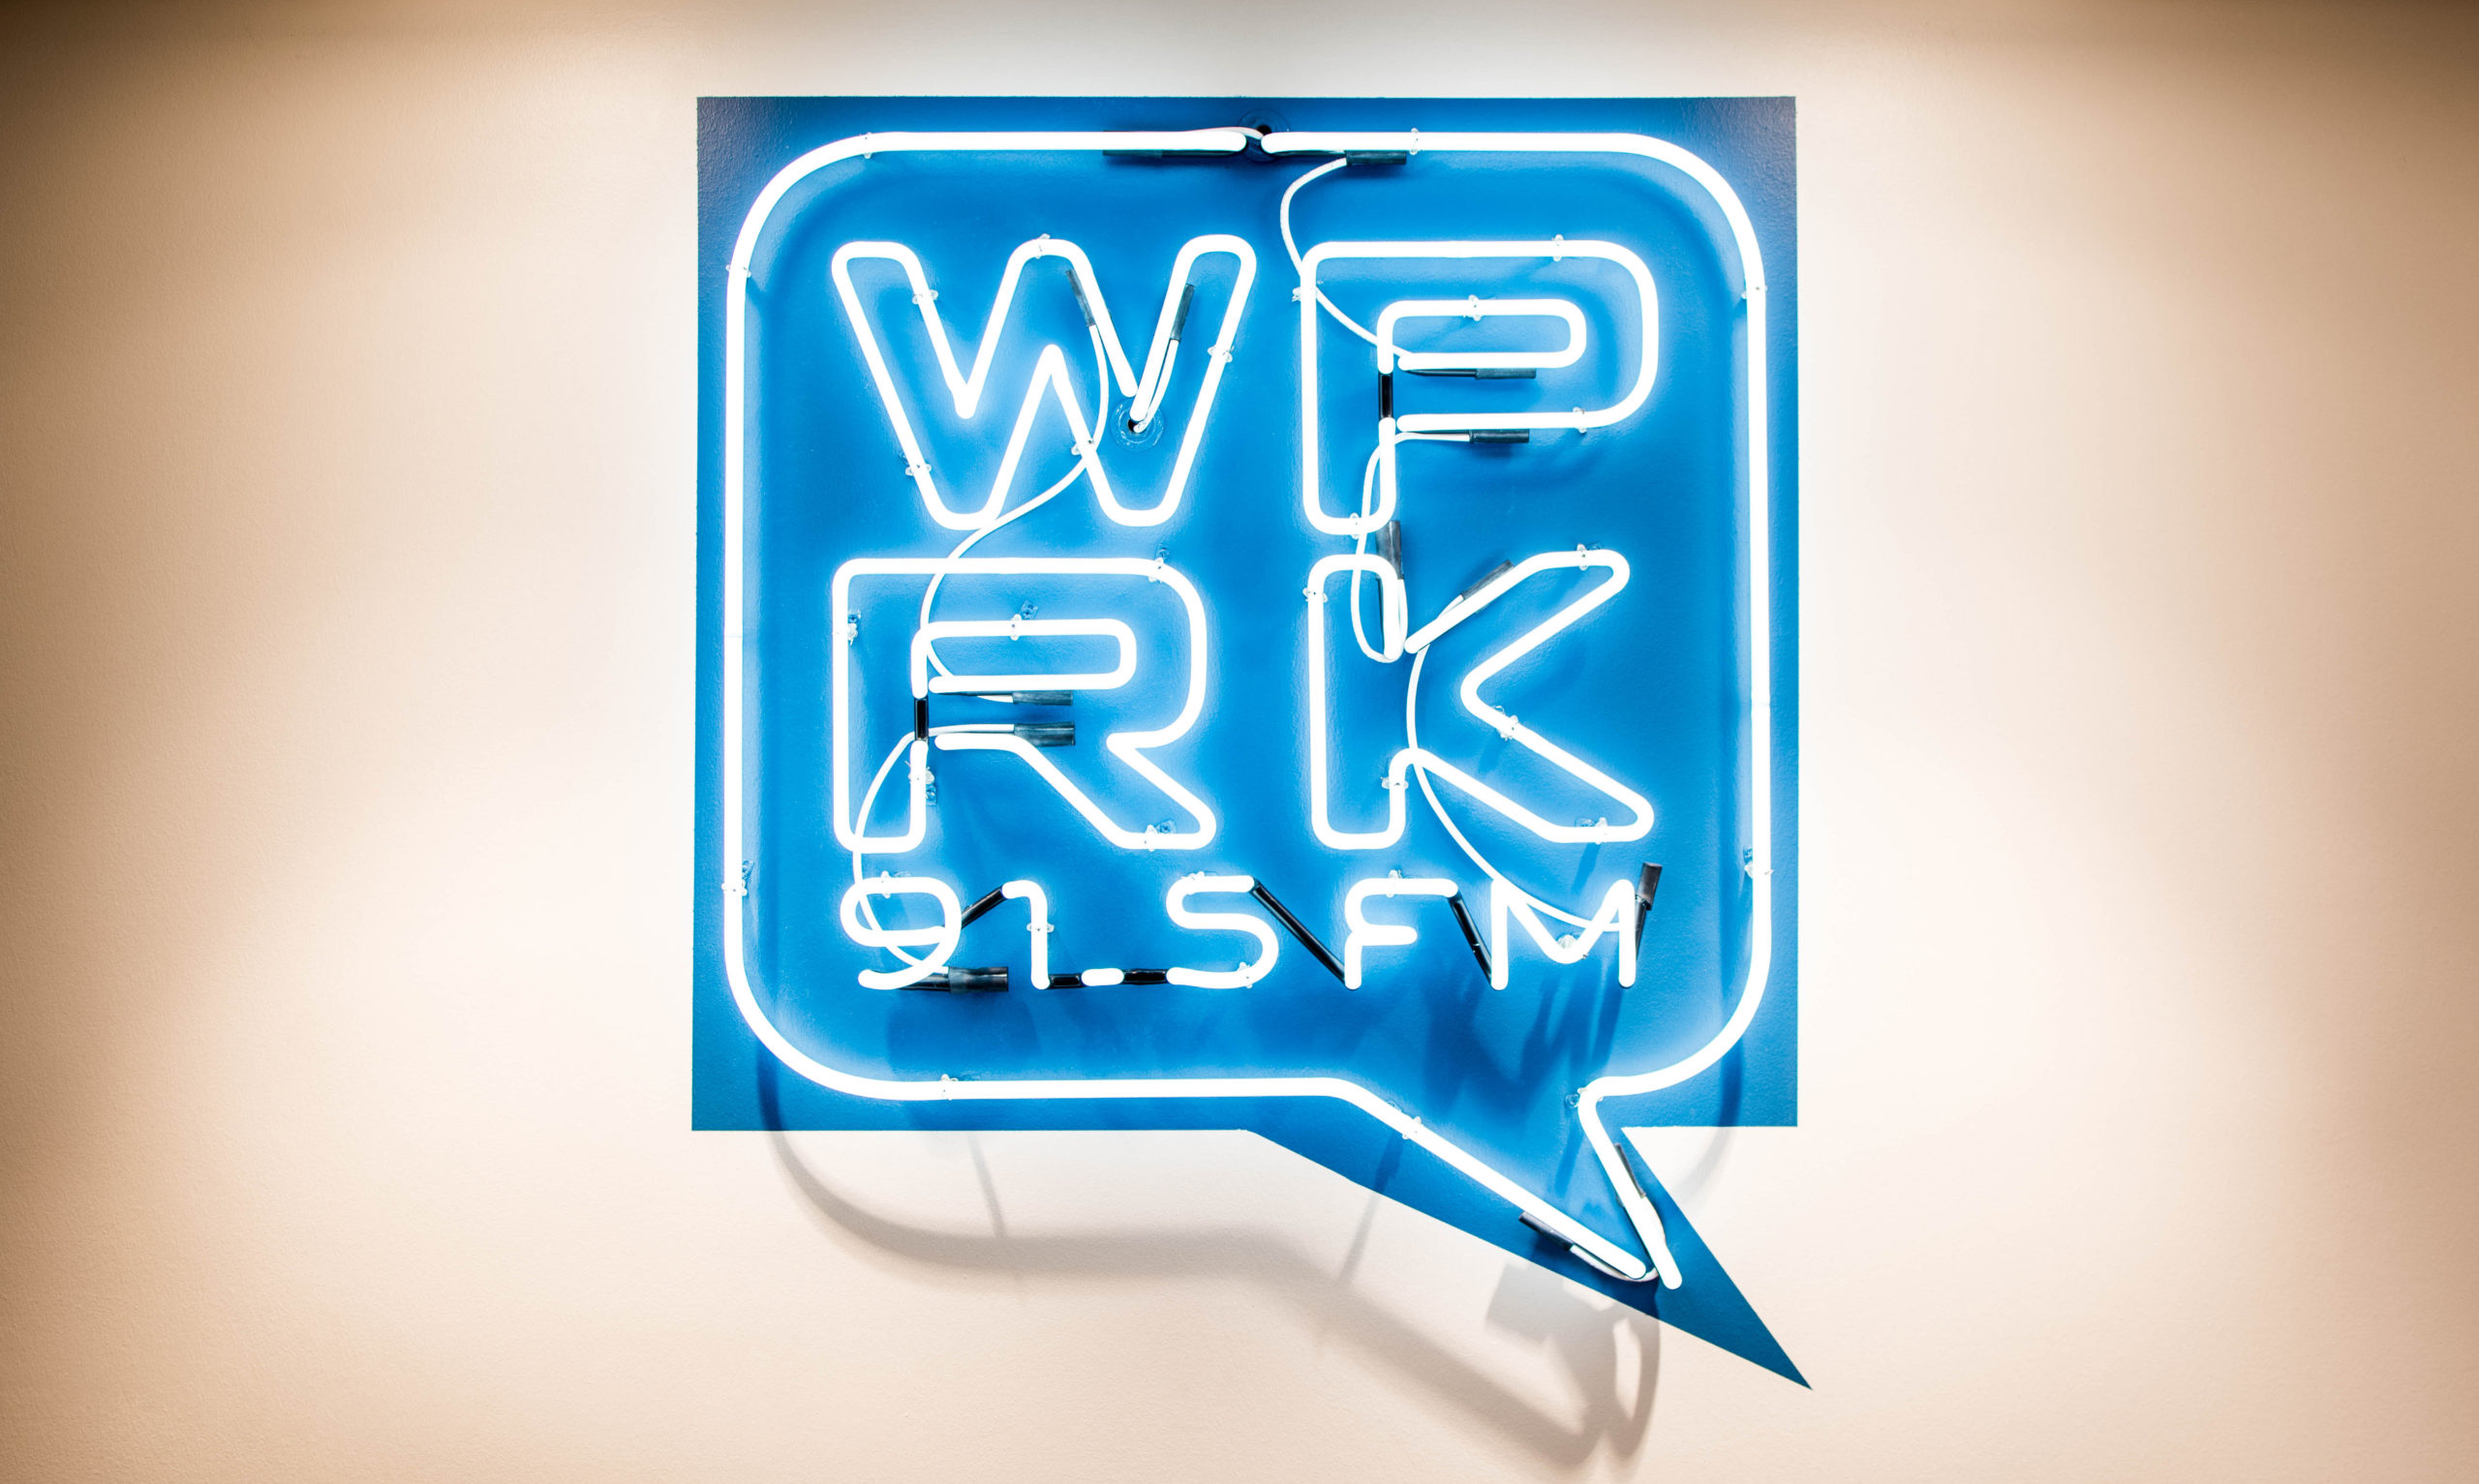 Blue neon sign that reads WPRK 91.5 FM.